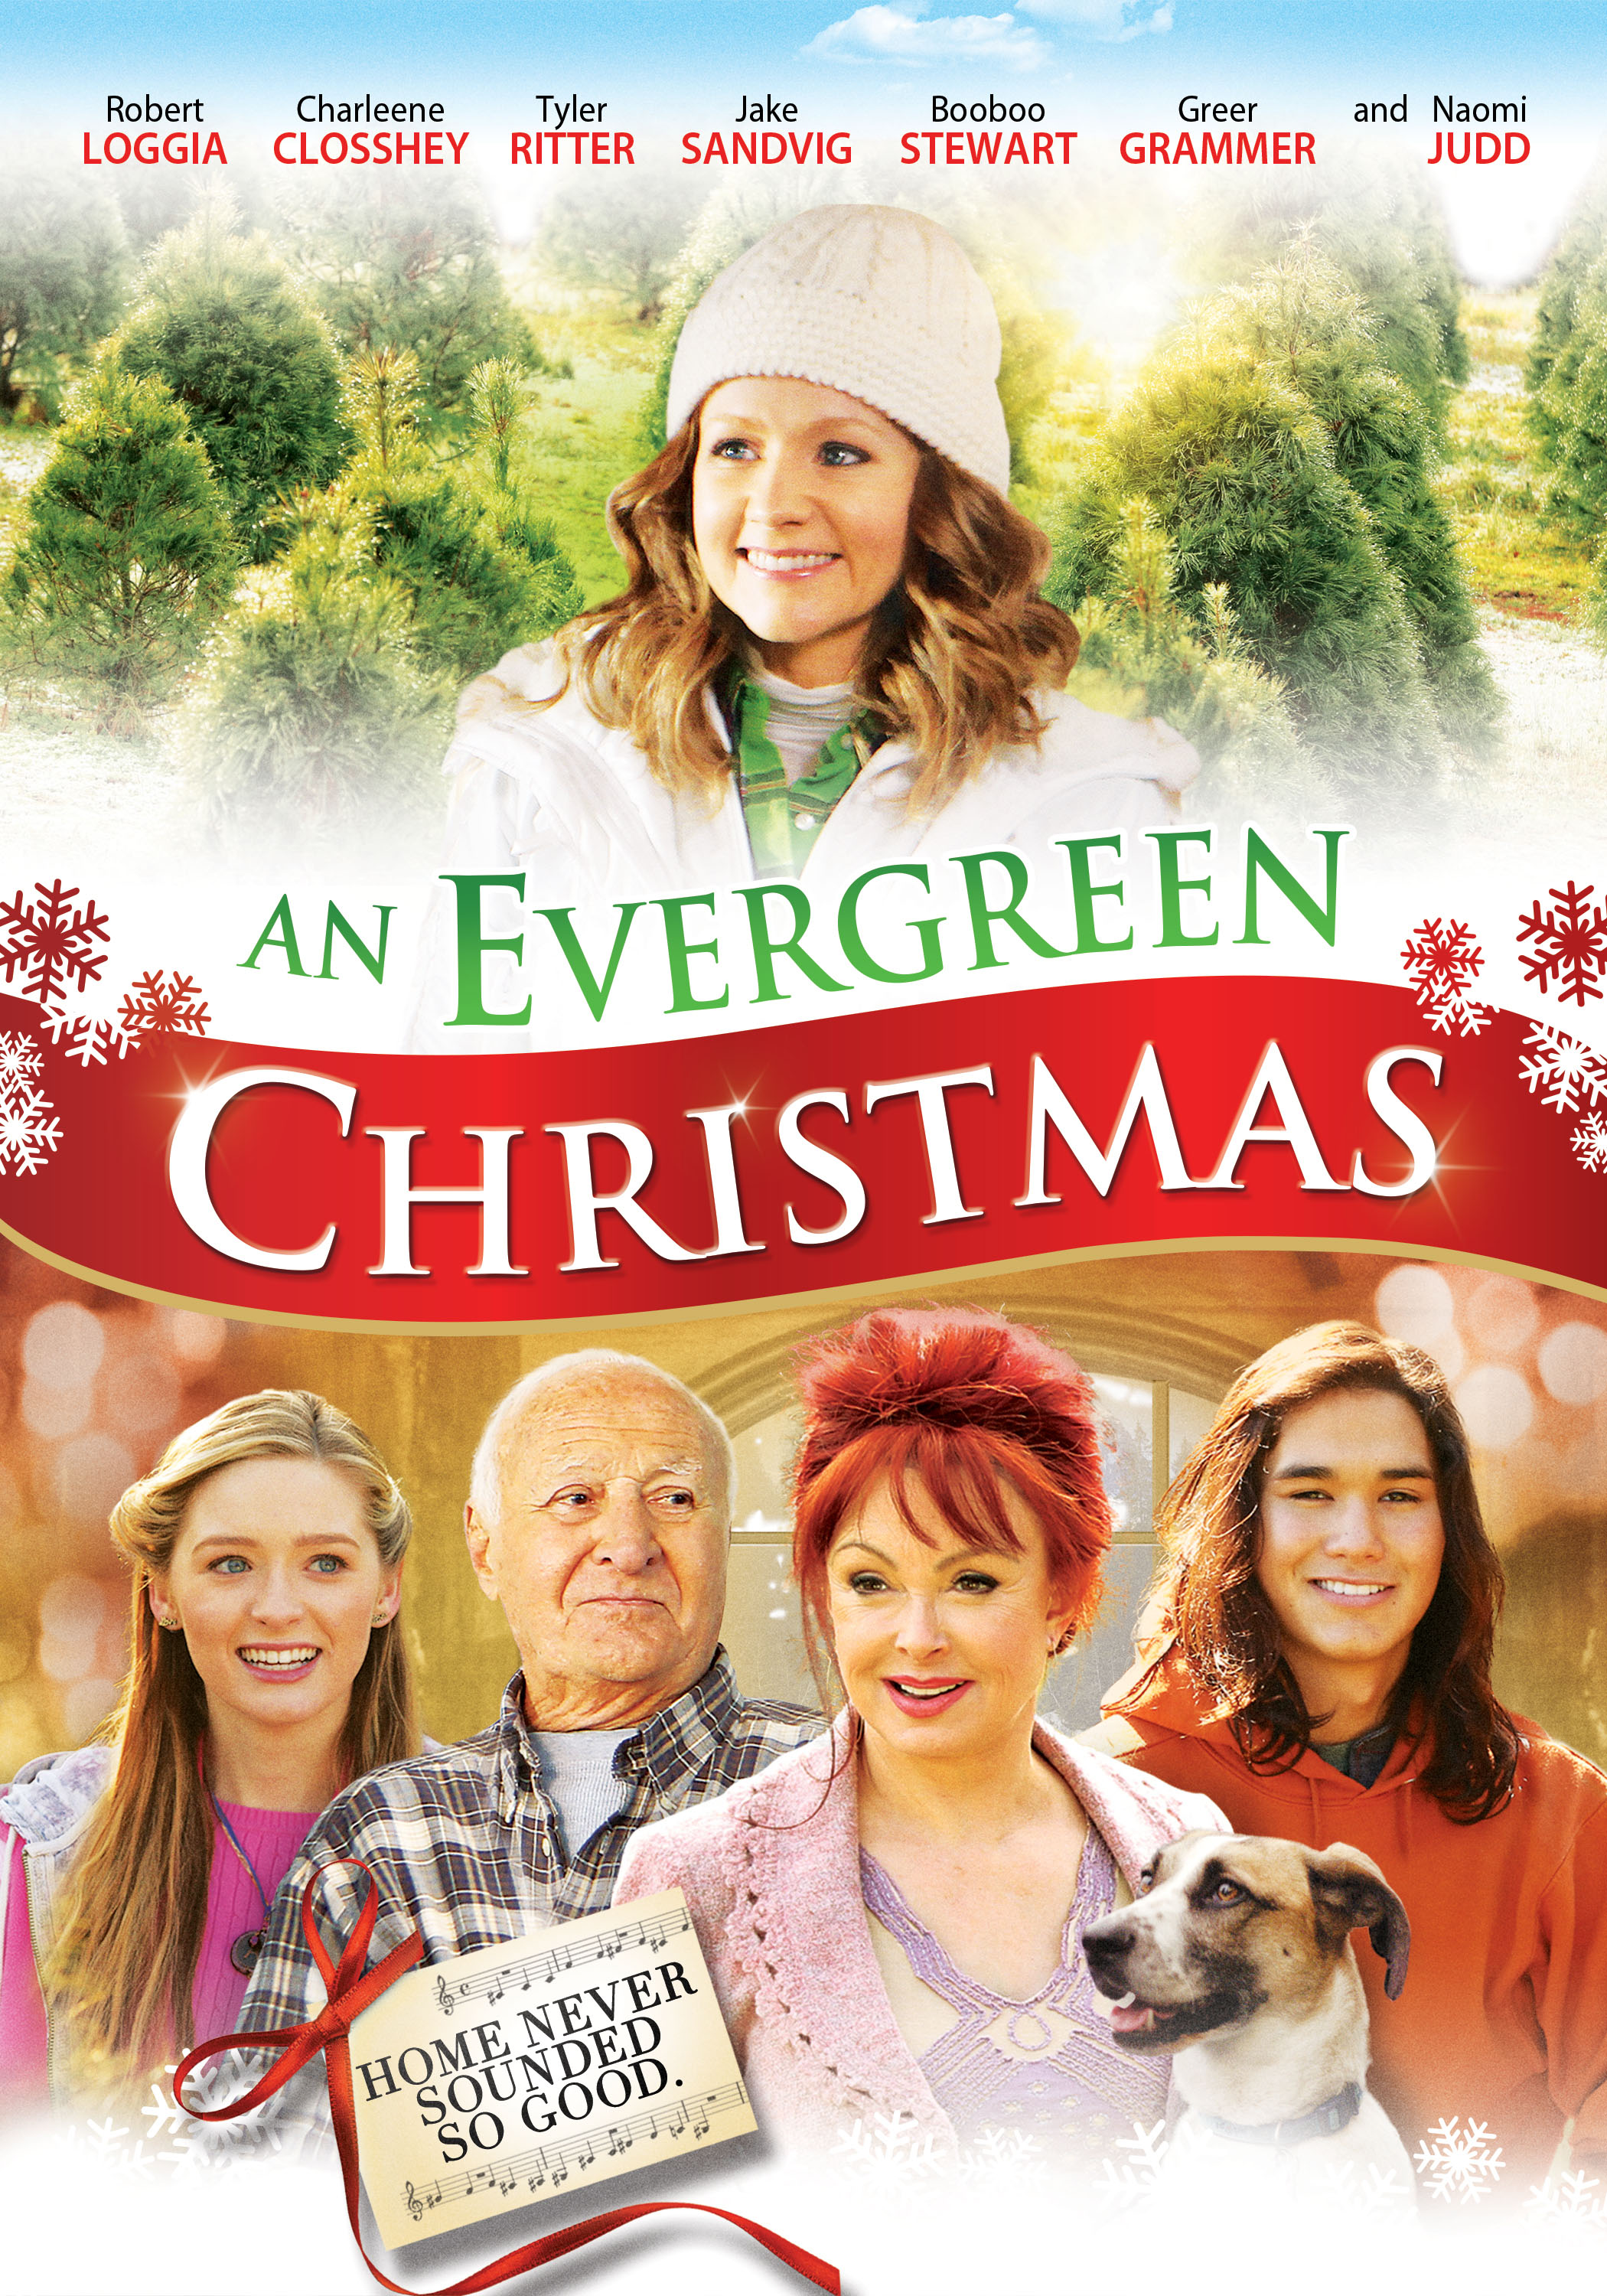 Naomi Judd, Robert Loggia, Booboo Stewart, Charleene Closshey and Greer Grammer in An Evergreen Christmas (2014)